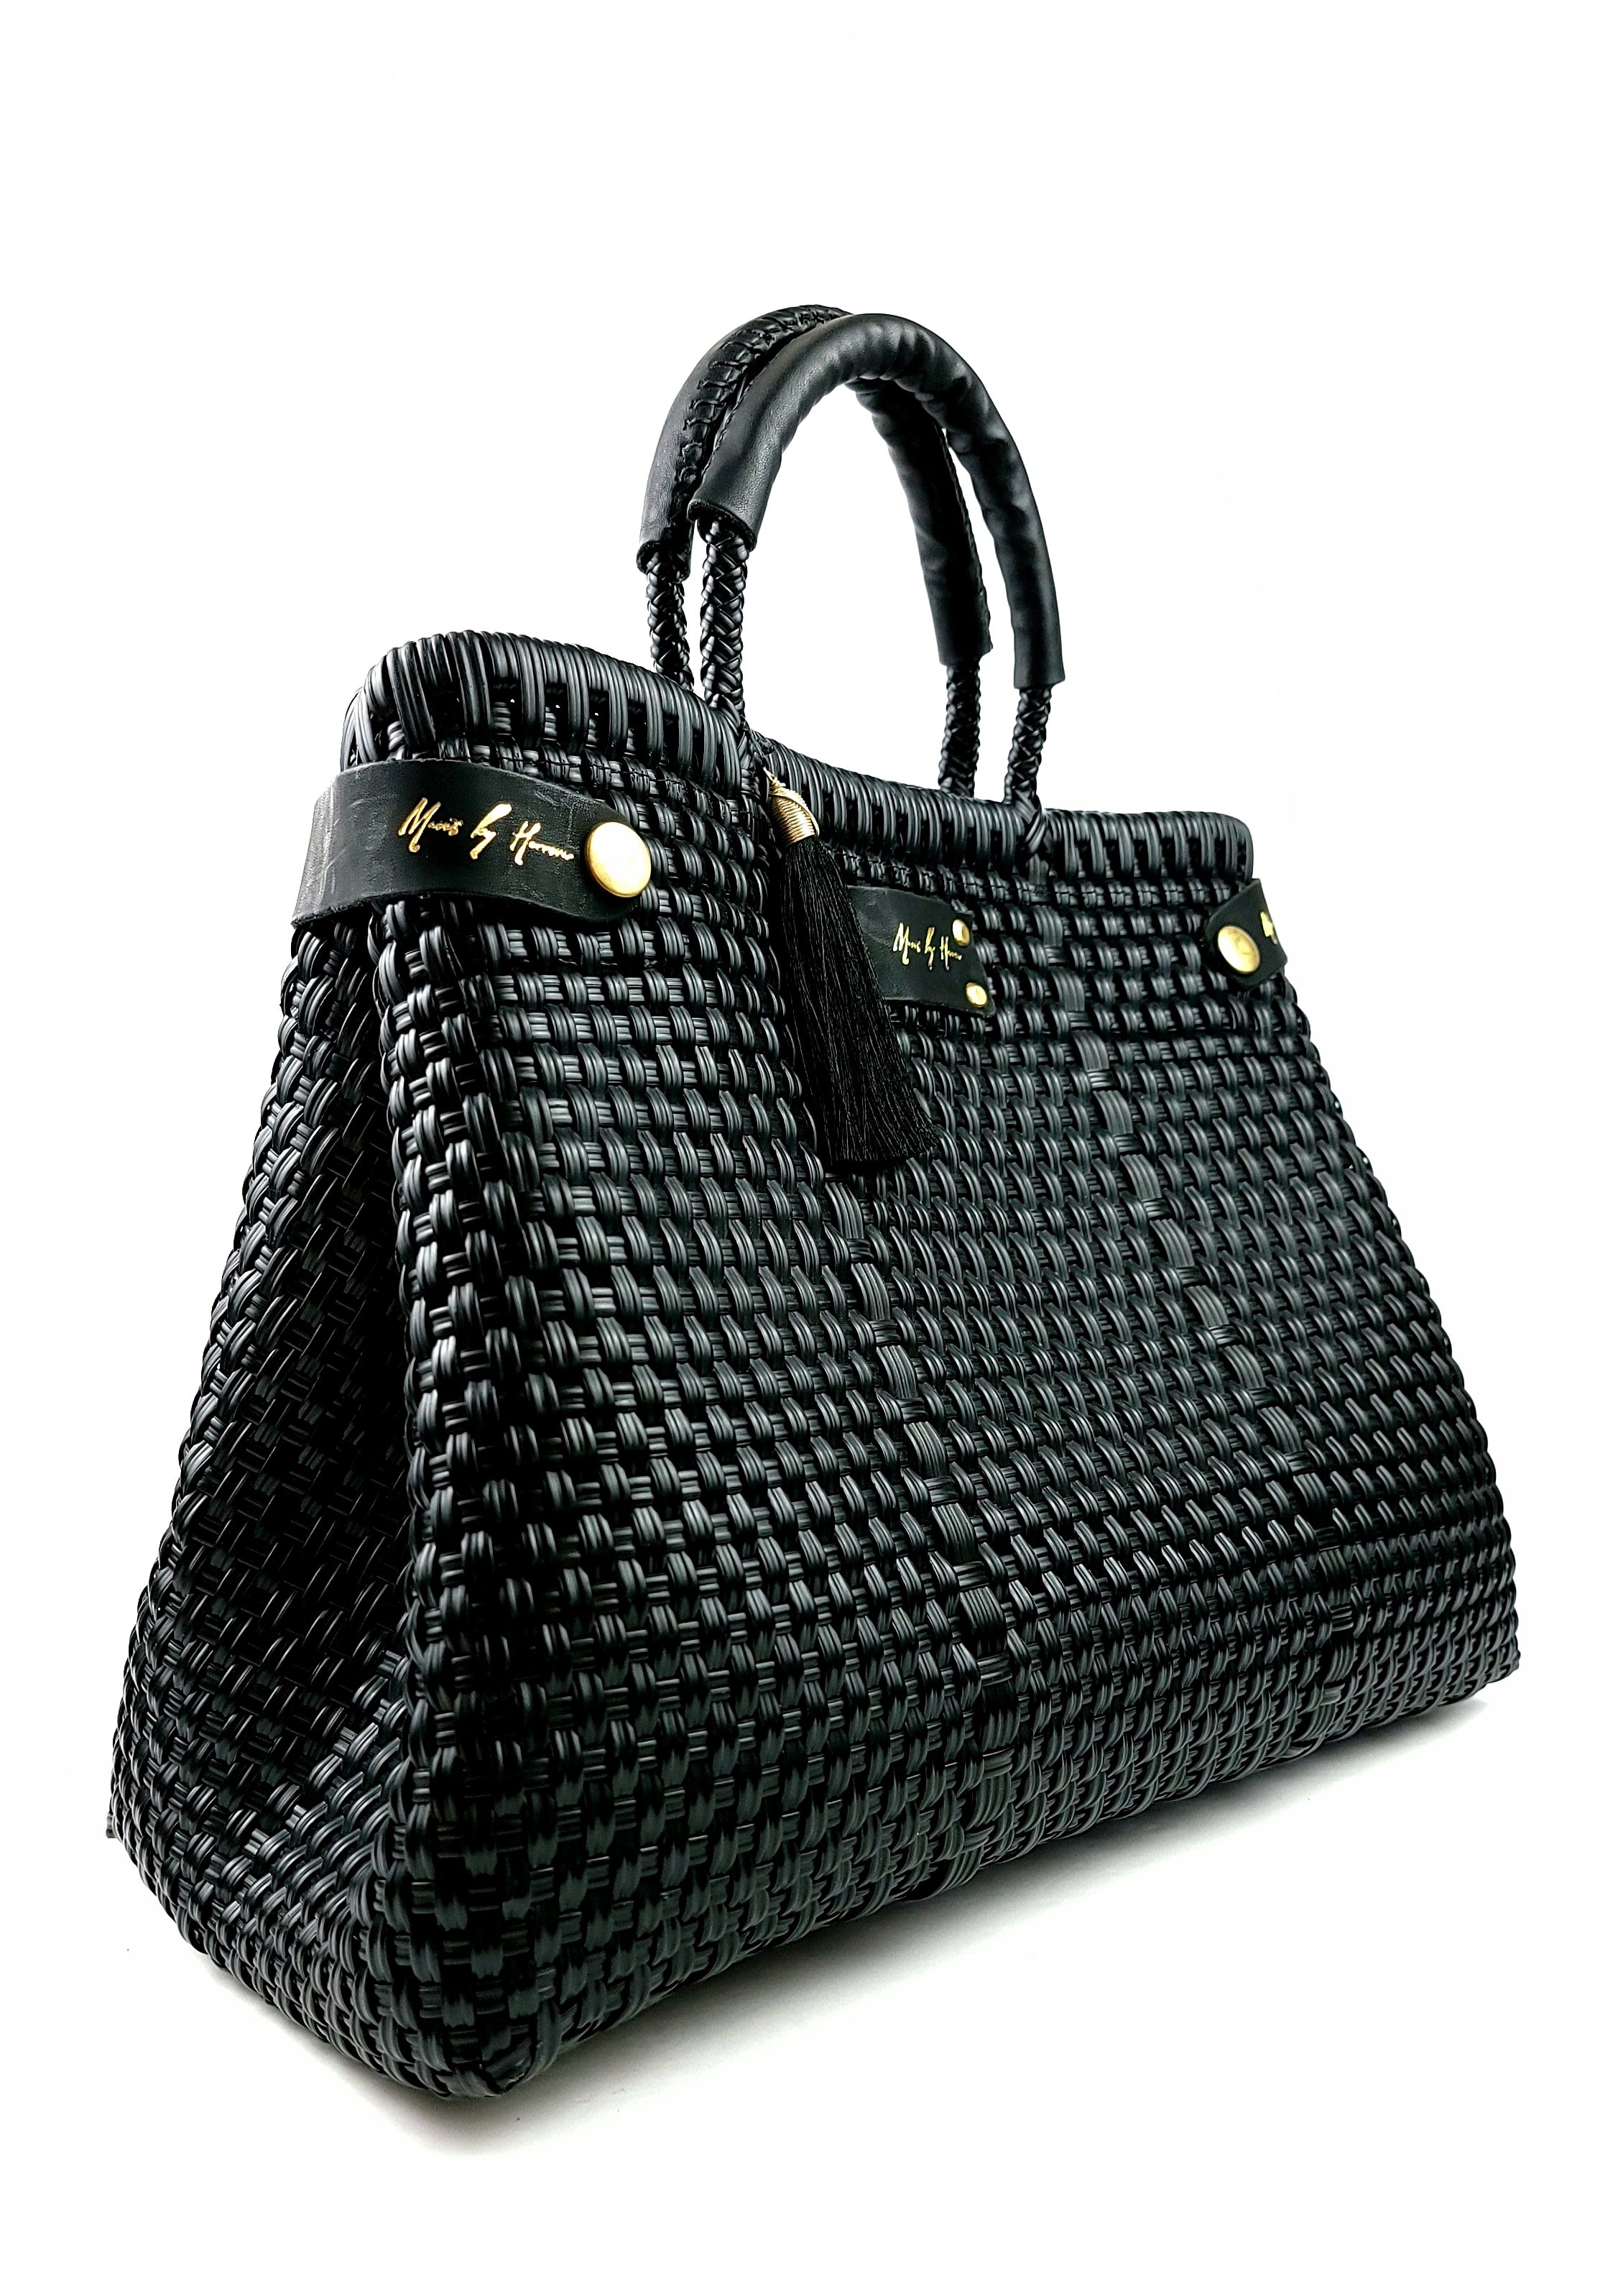 Shop Luxury Sustainable Bags. Fashion Designer Mavis by Herrera. handmade pieces. Free Shipping. Luxury Eco Bags. 